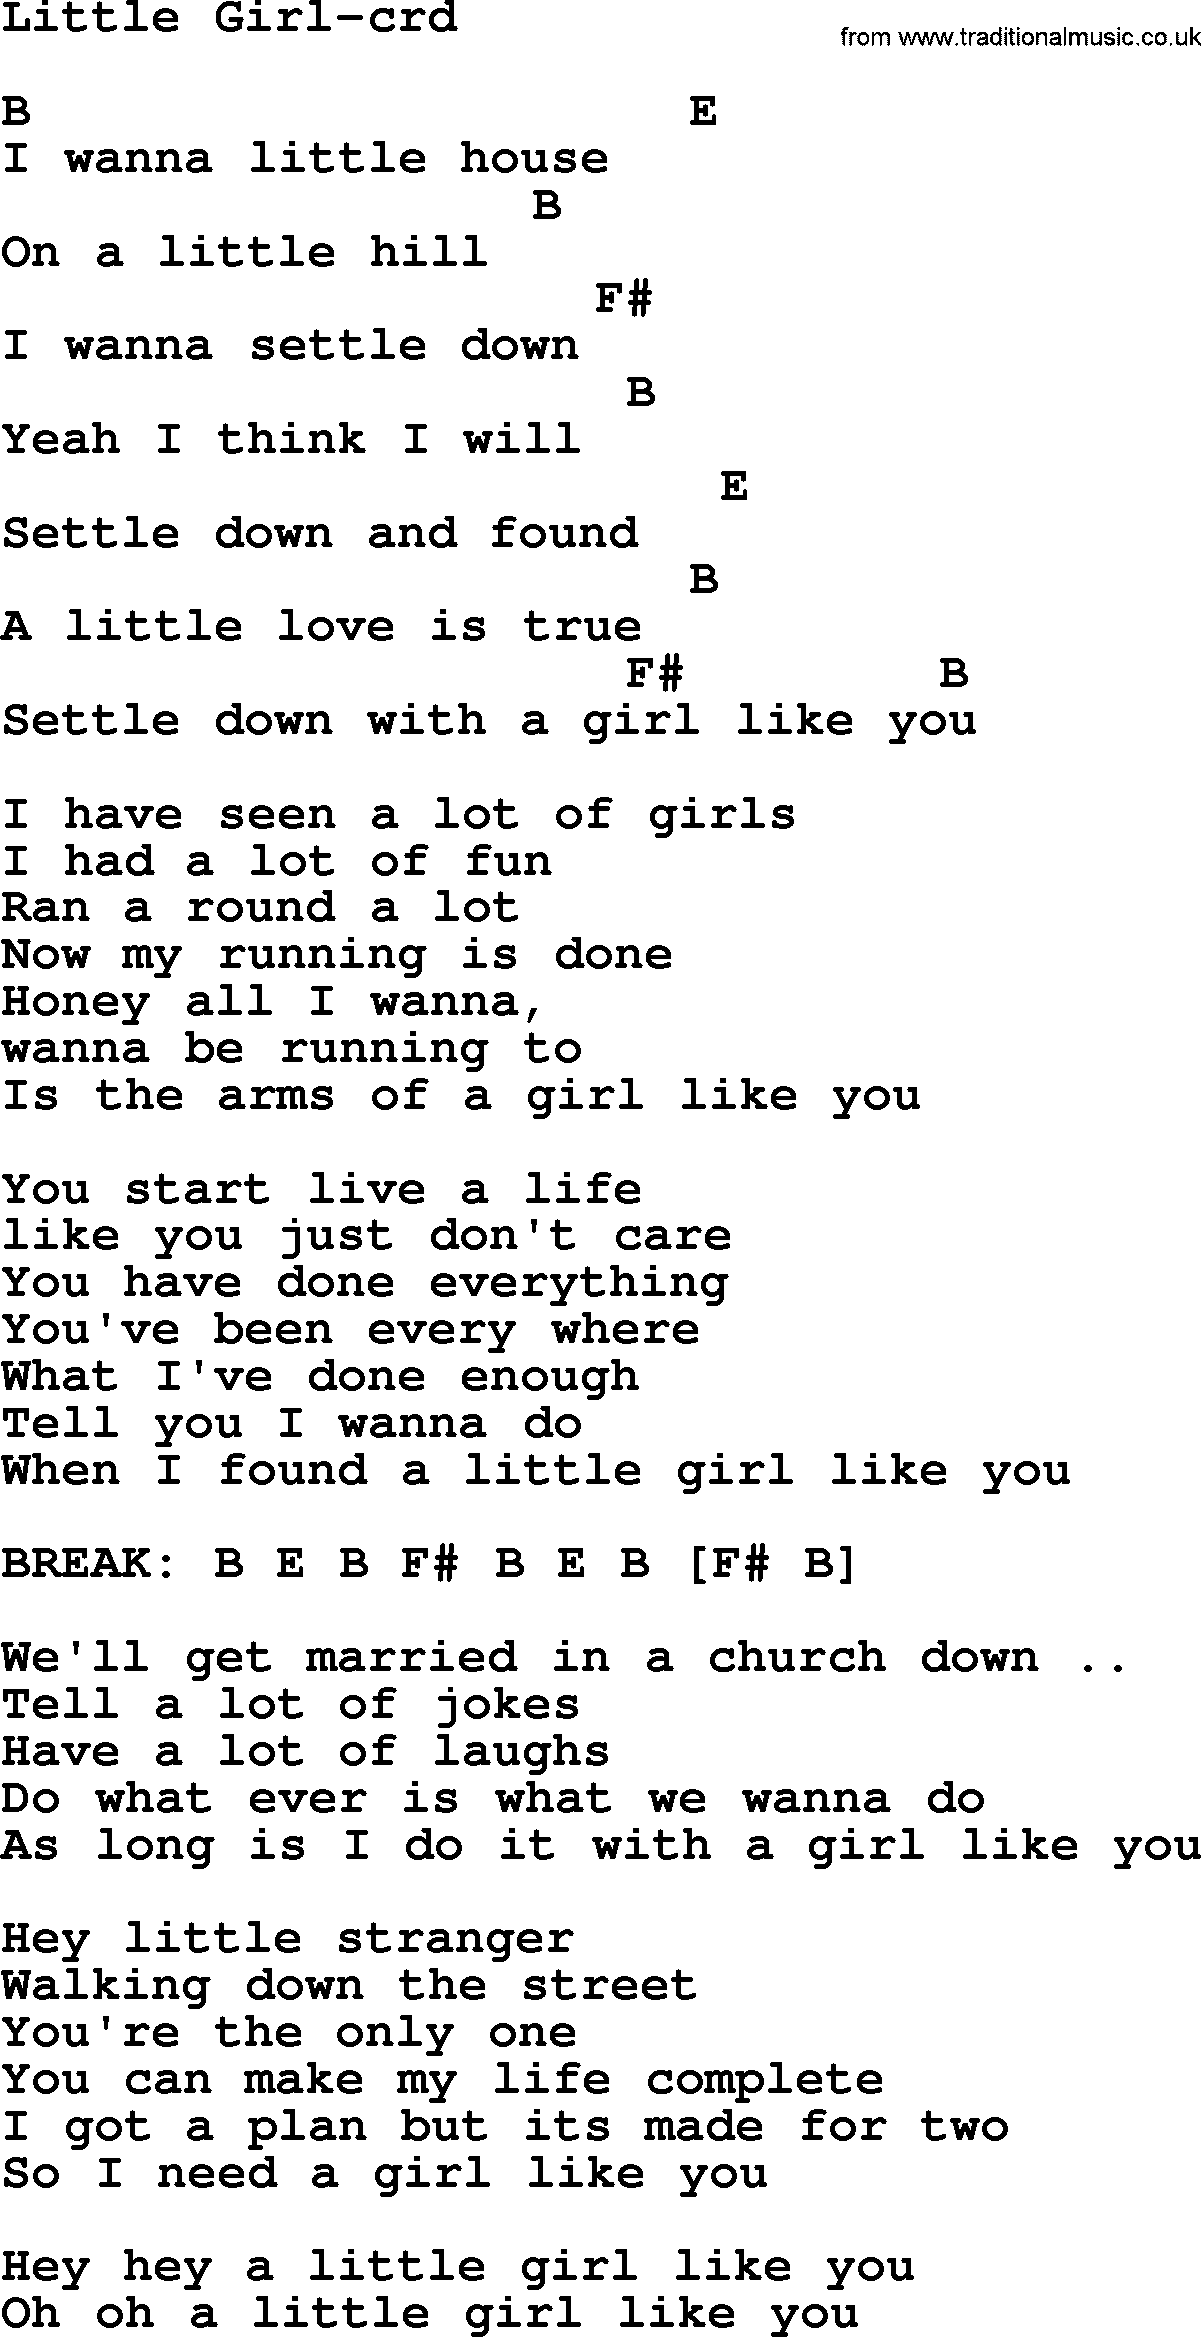 Bruce Springsteen song: Little Girl, lyrics and chords